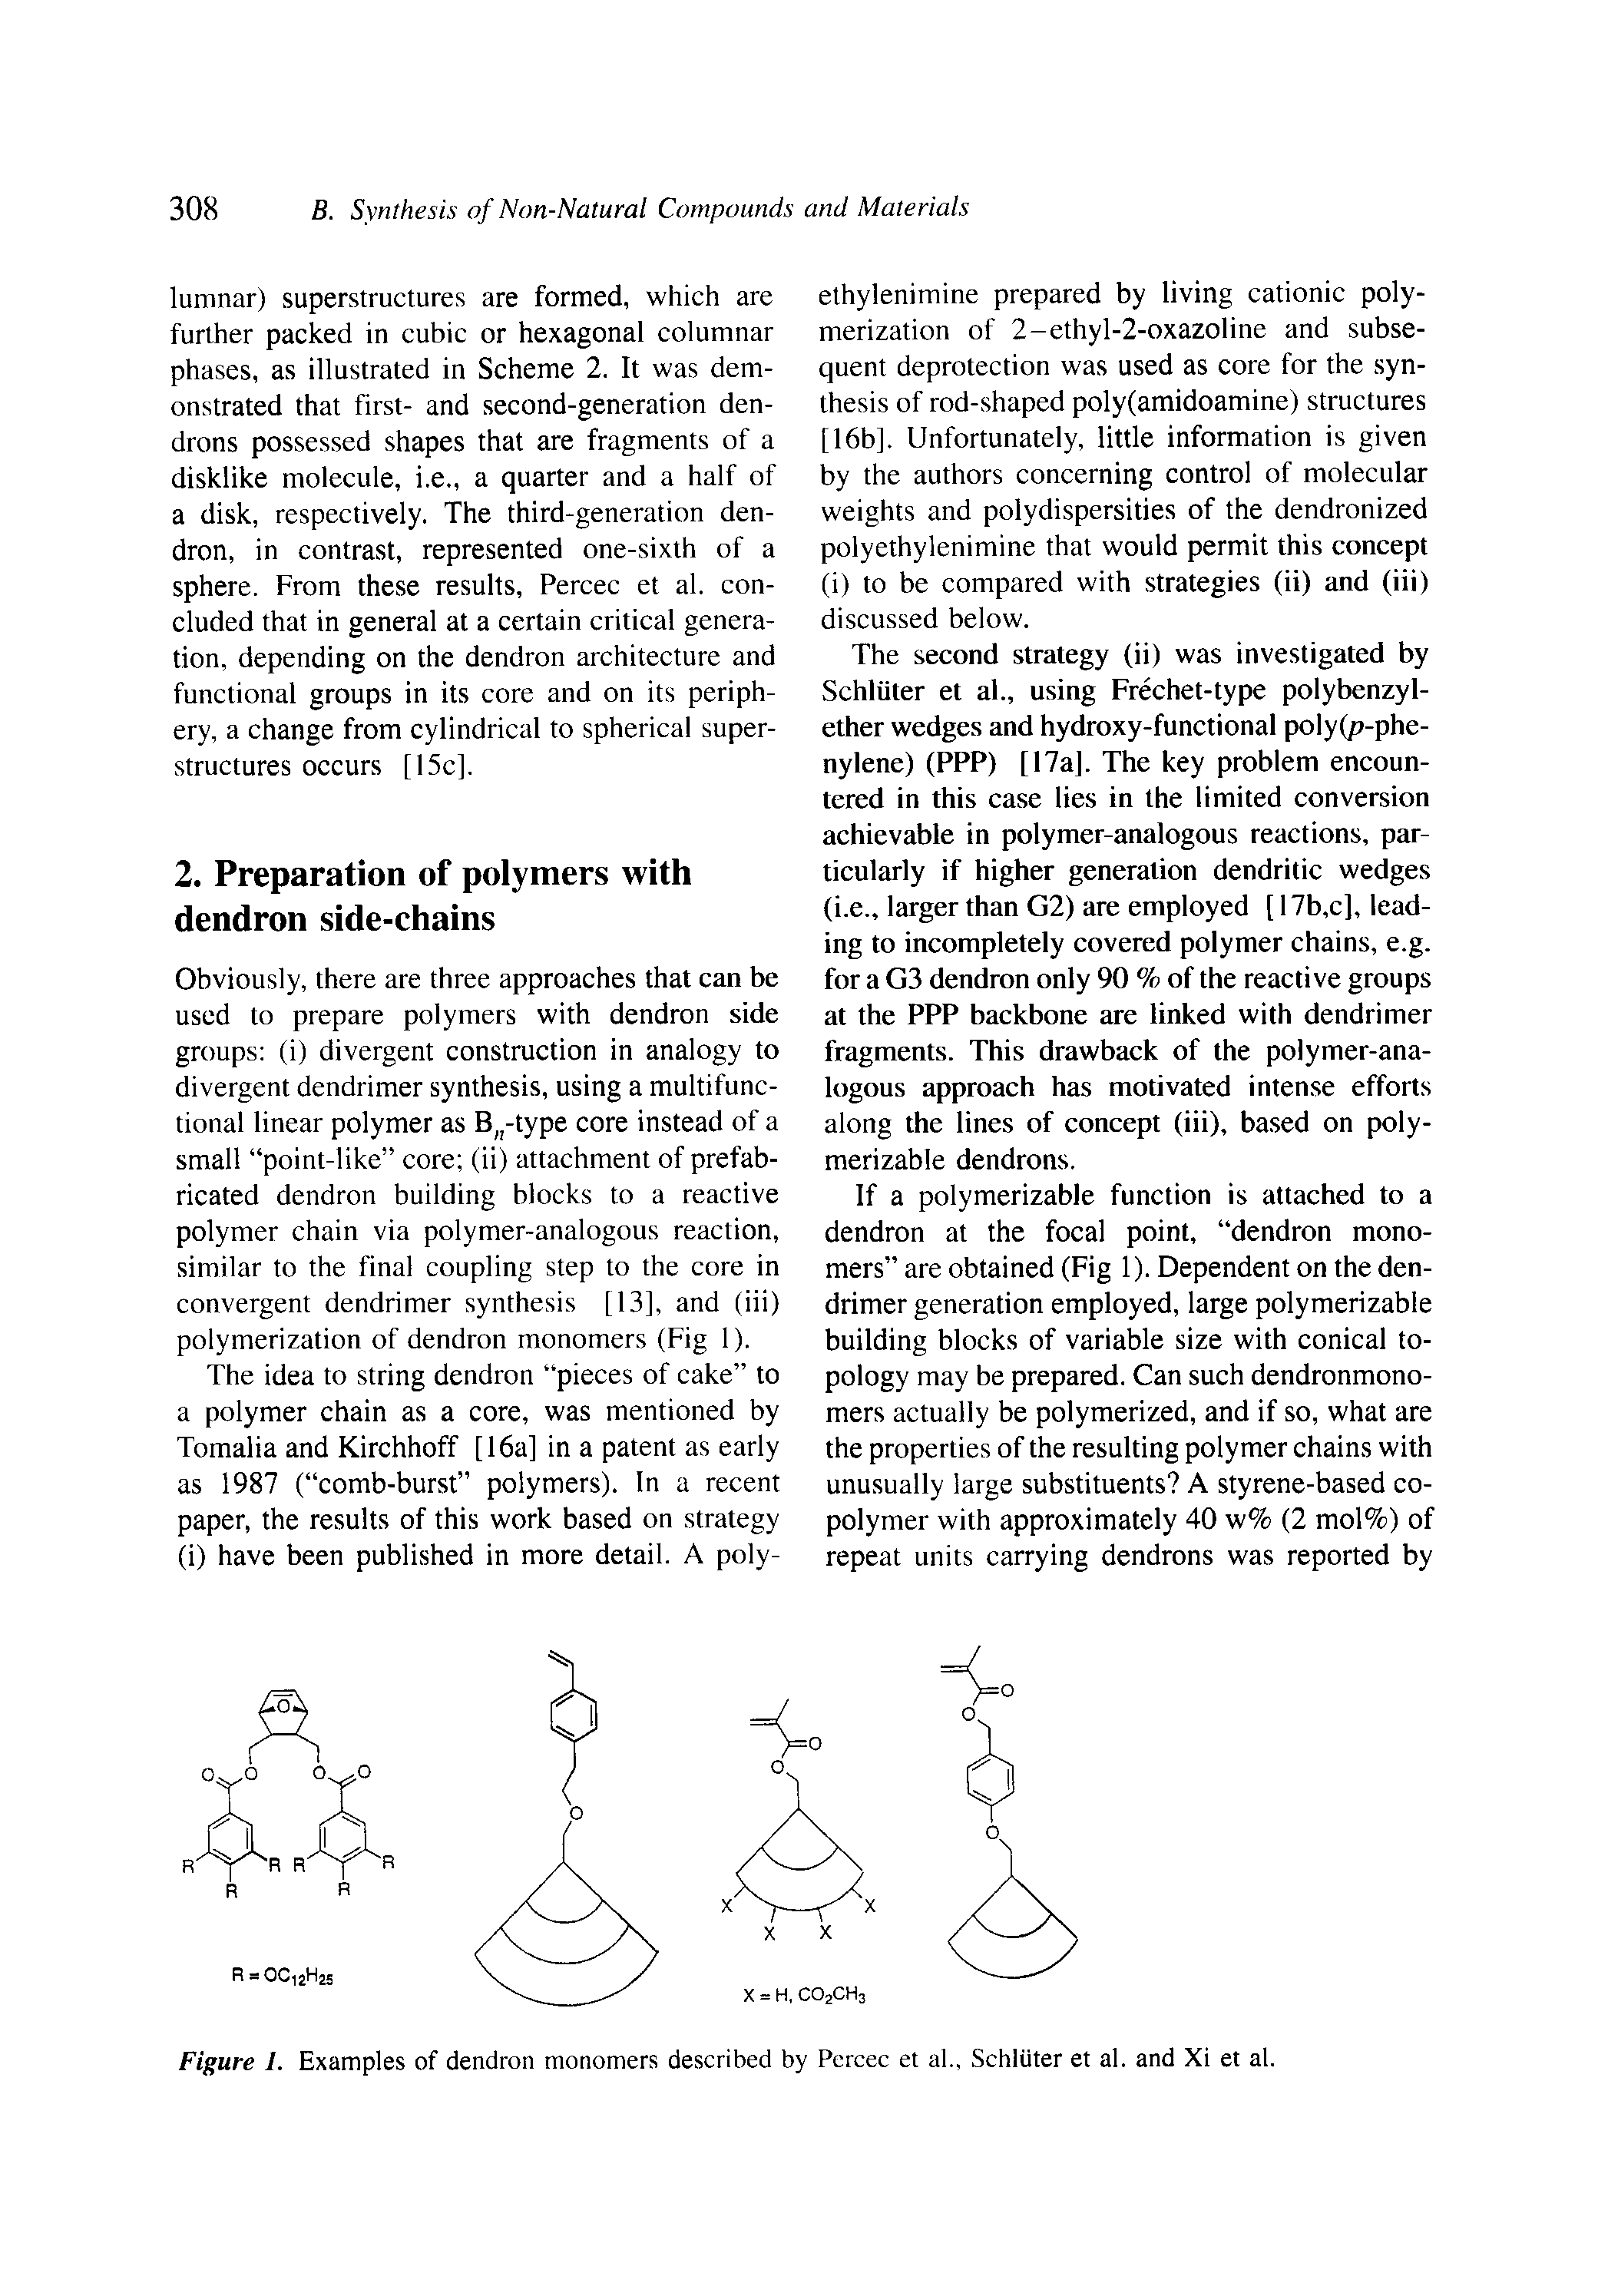 Figure 1. Examples of dendron monomers described by Percec et al., Schliiter et al. and XI et al.